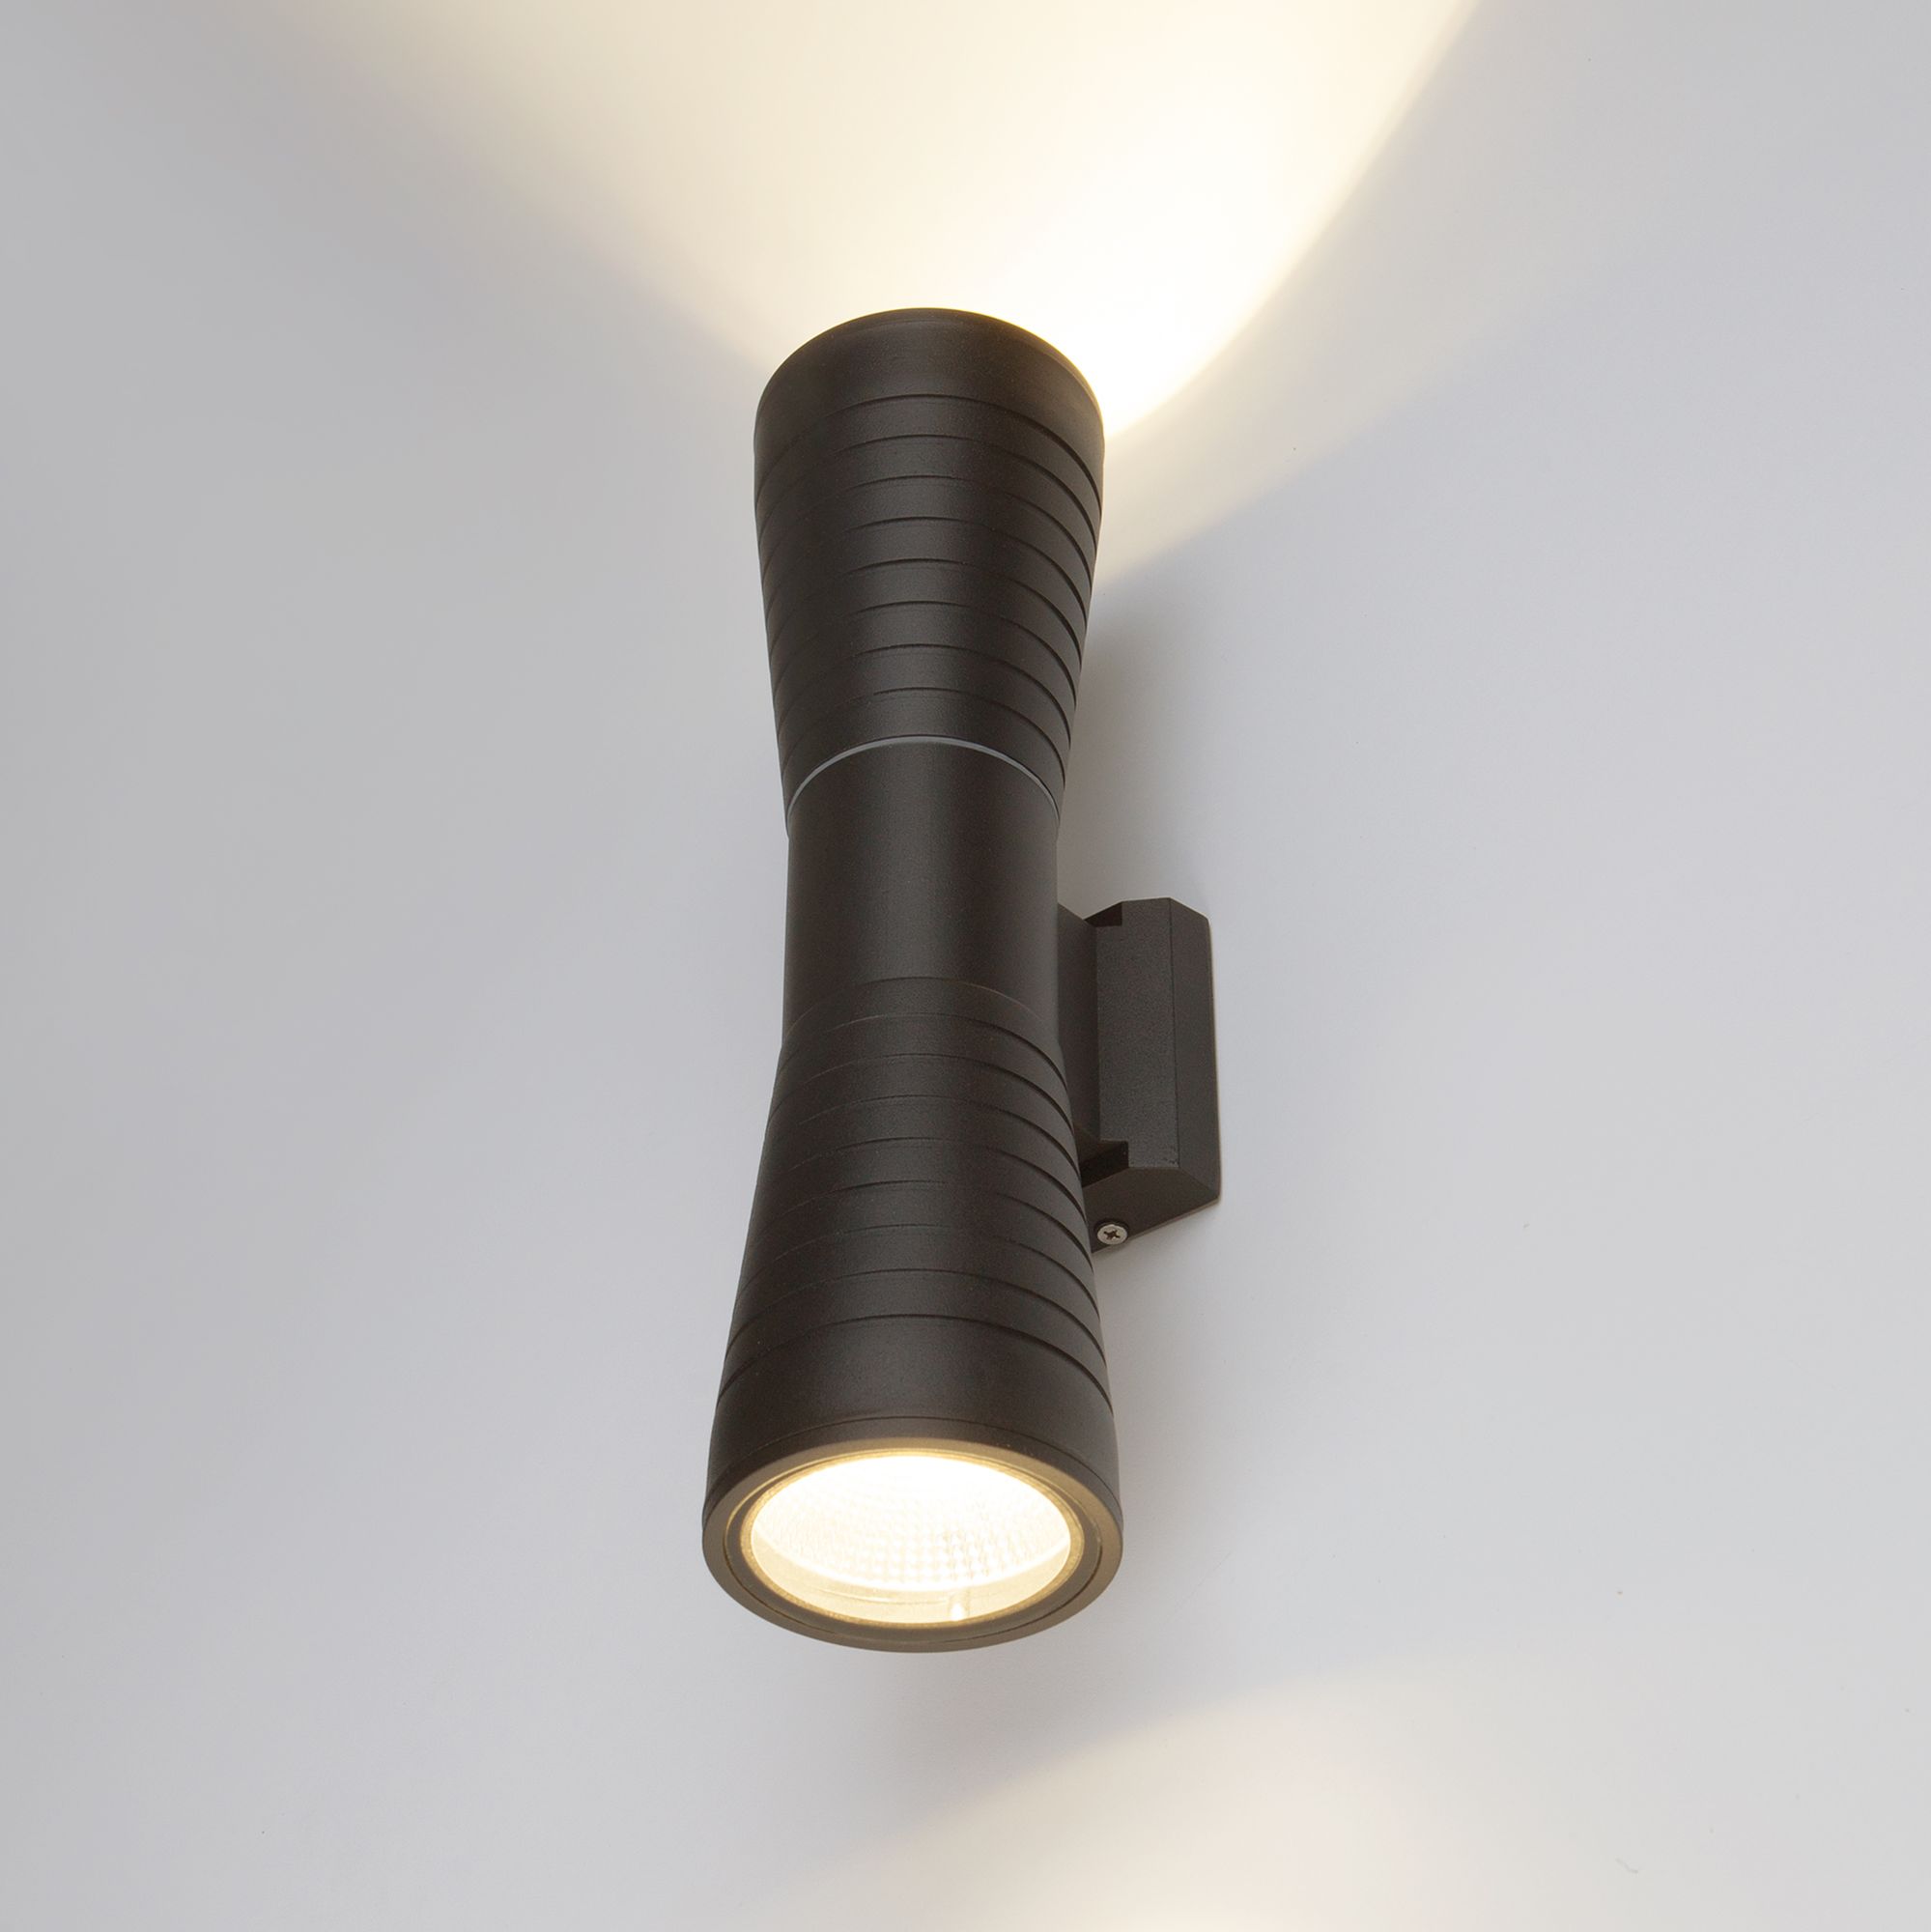 Tube double черный уличный настенный светодиодный светильник 1502 TECHNO LED 1502 TECHNO LED